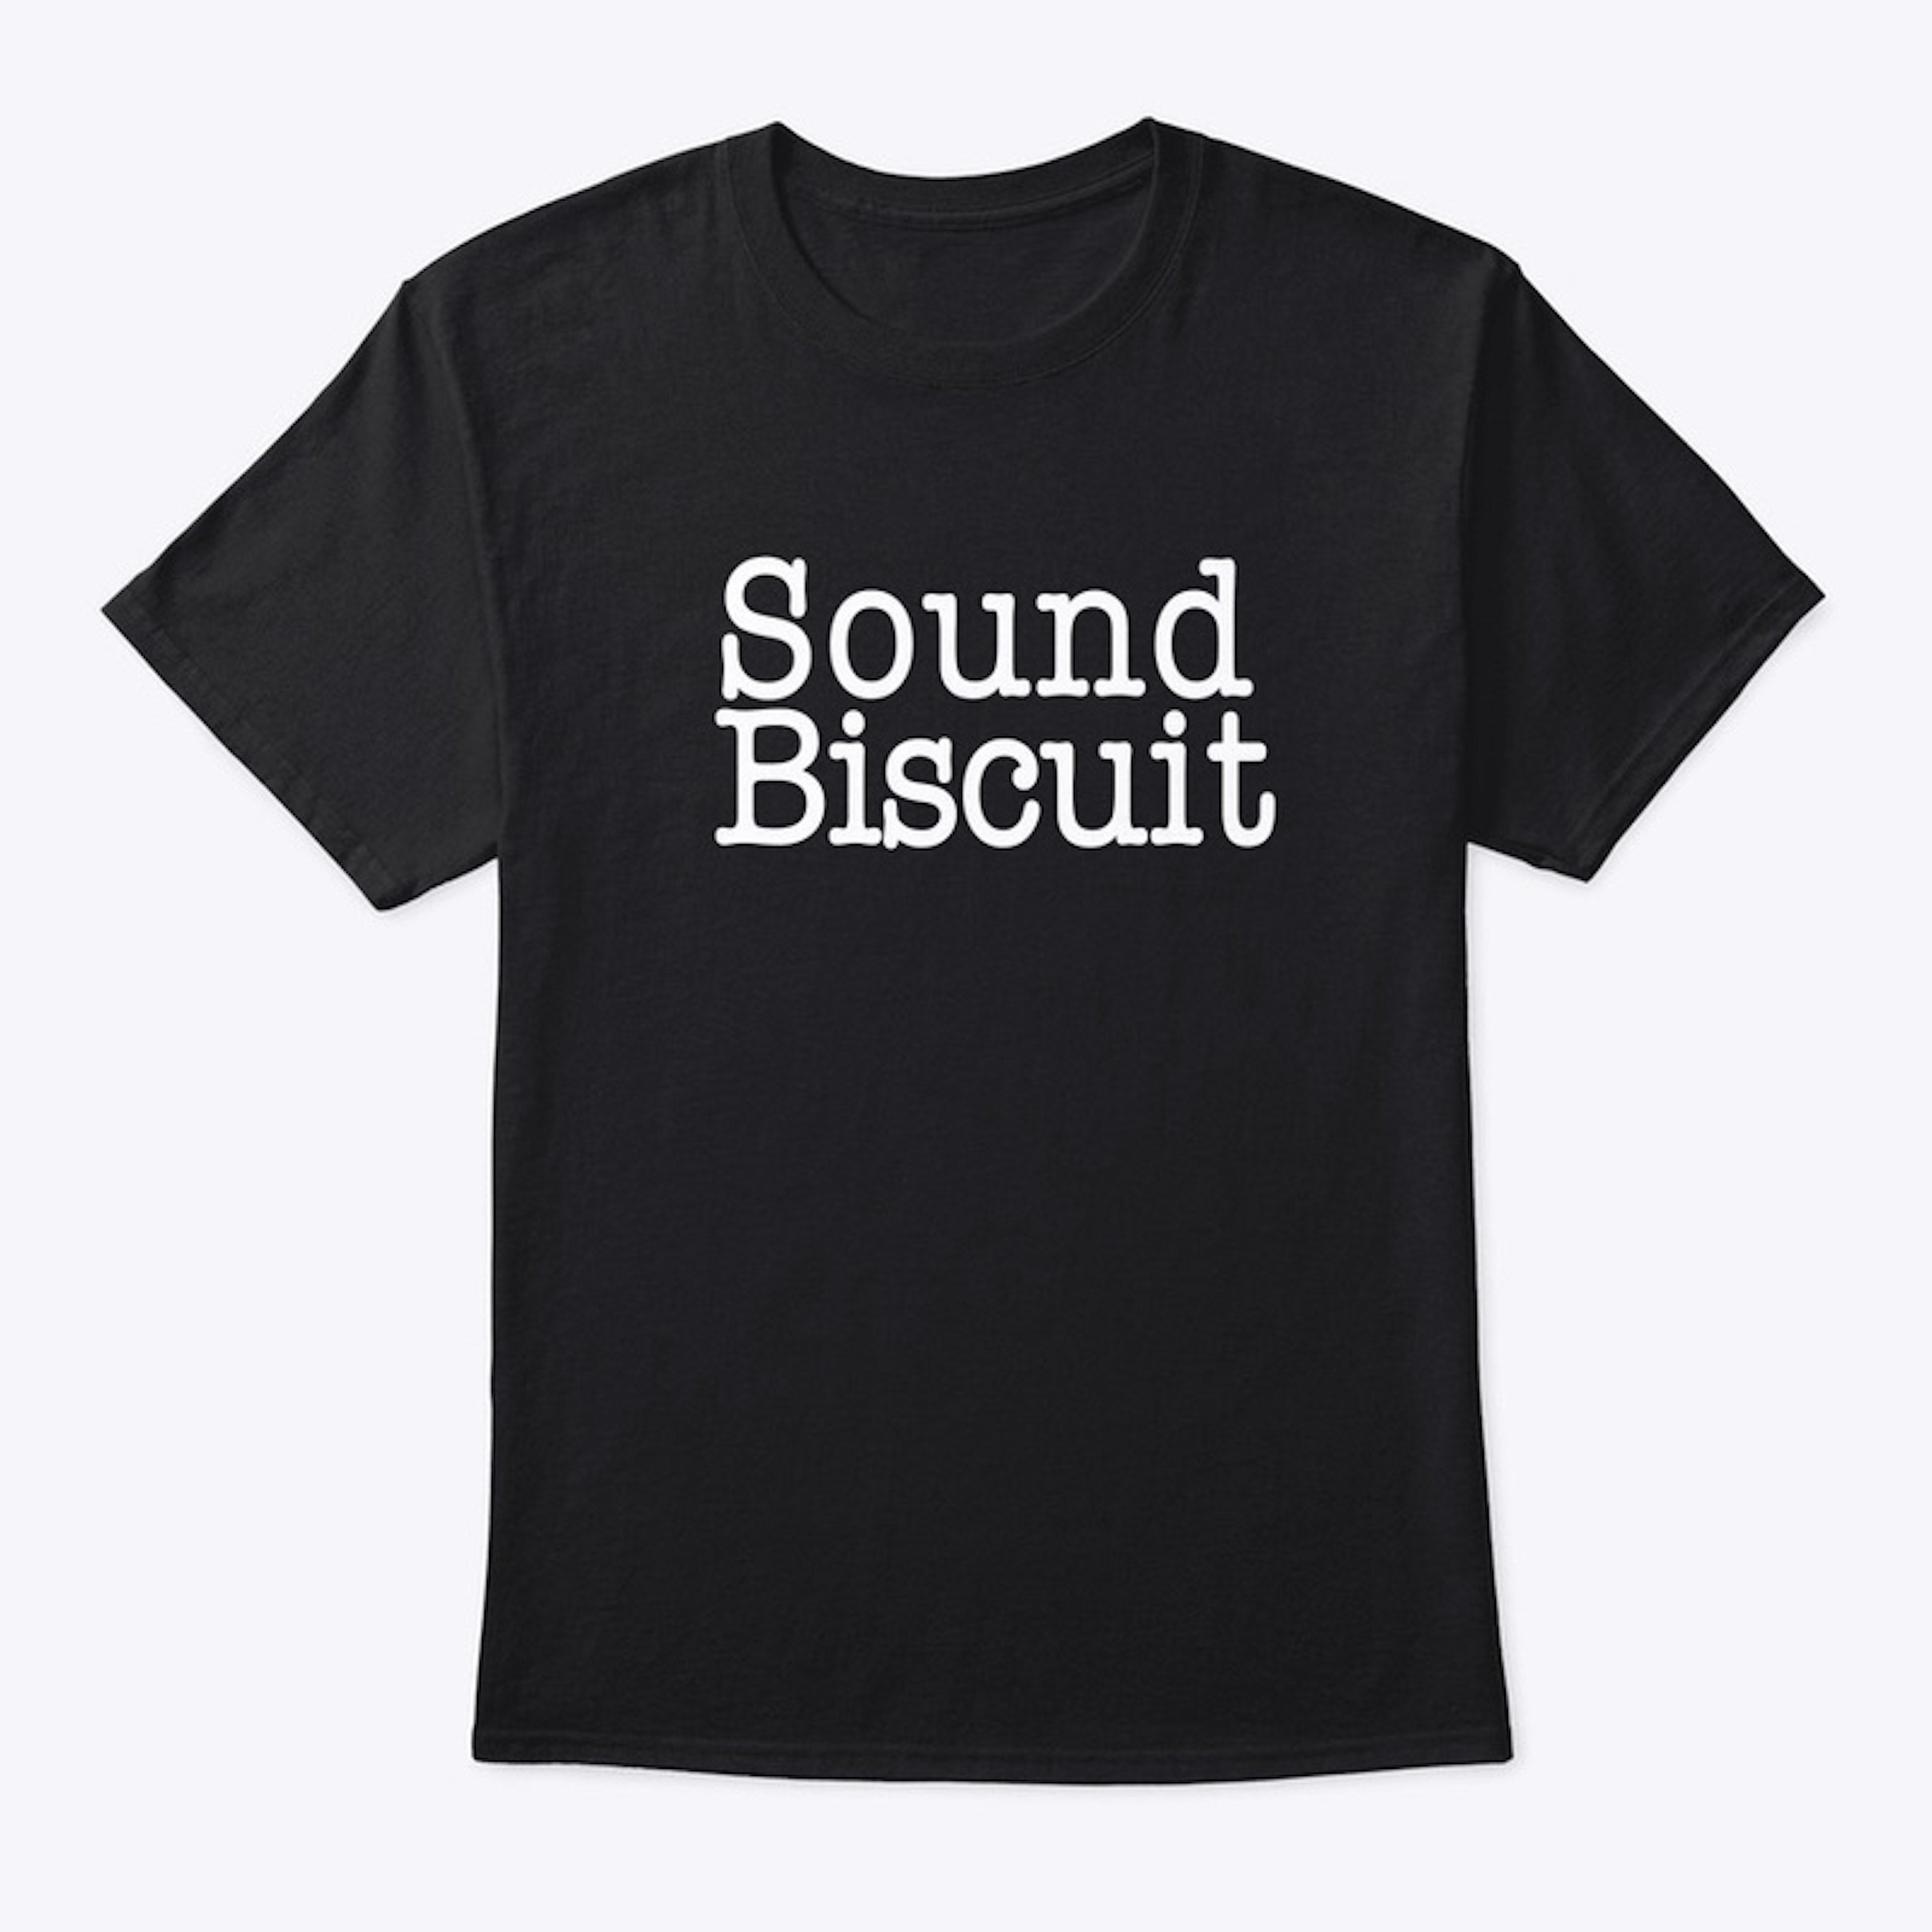 Sound Biscuit Apparel 